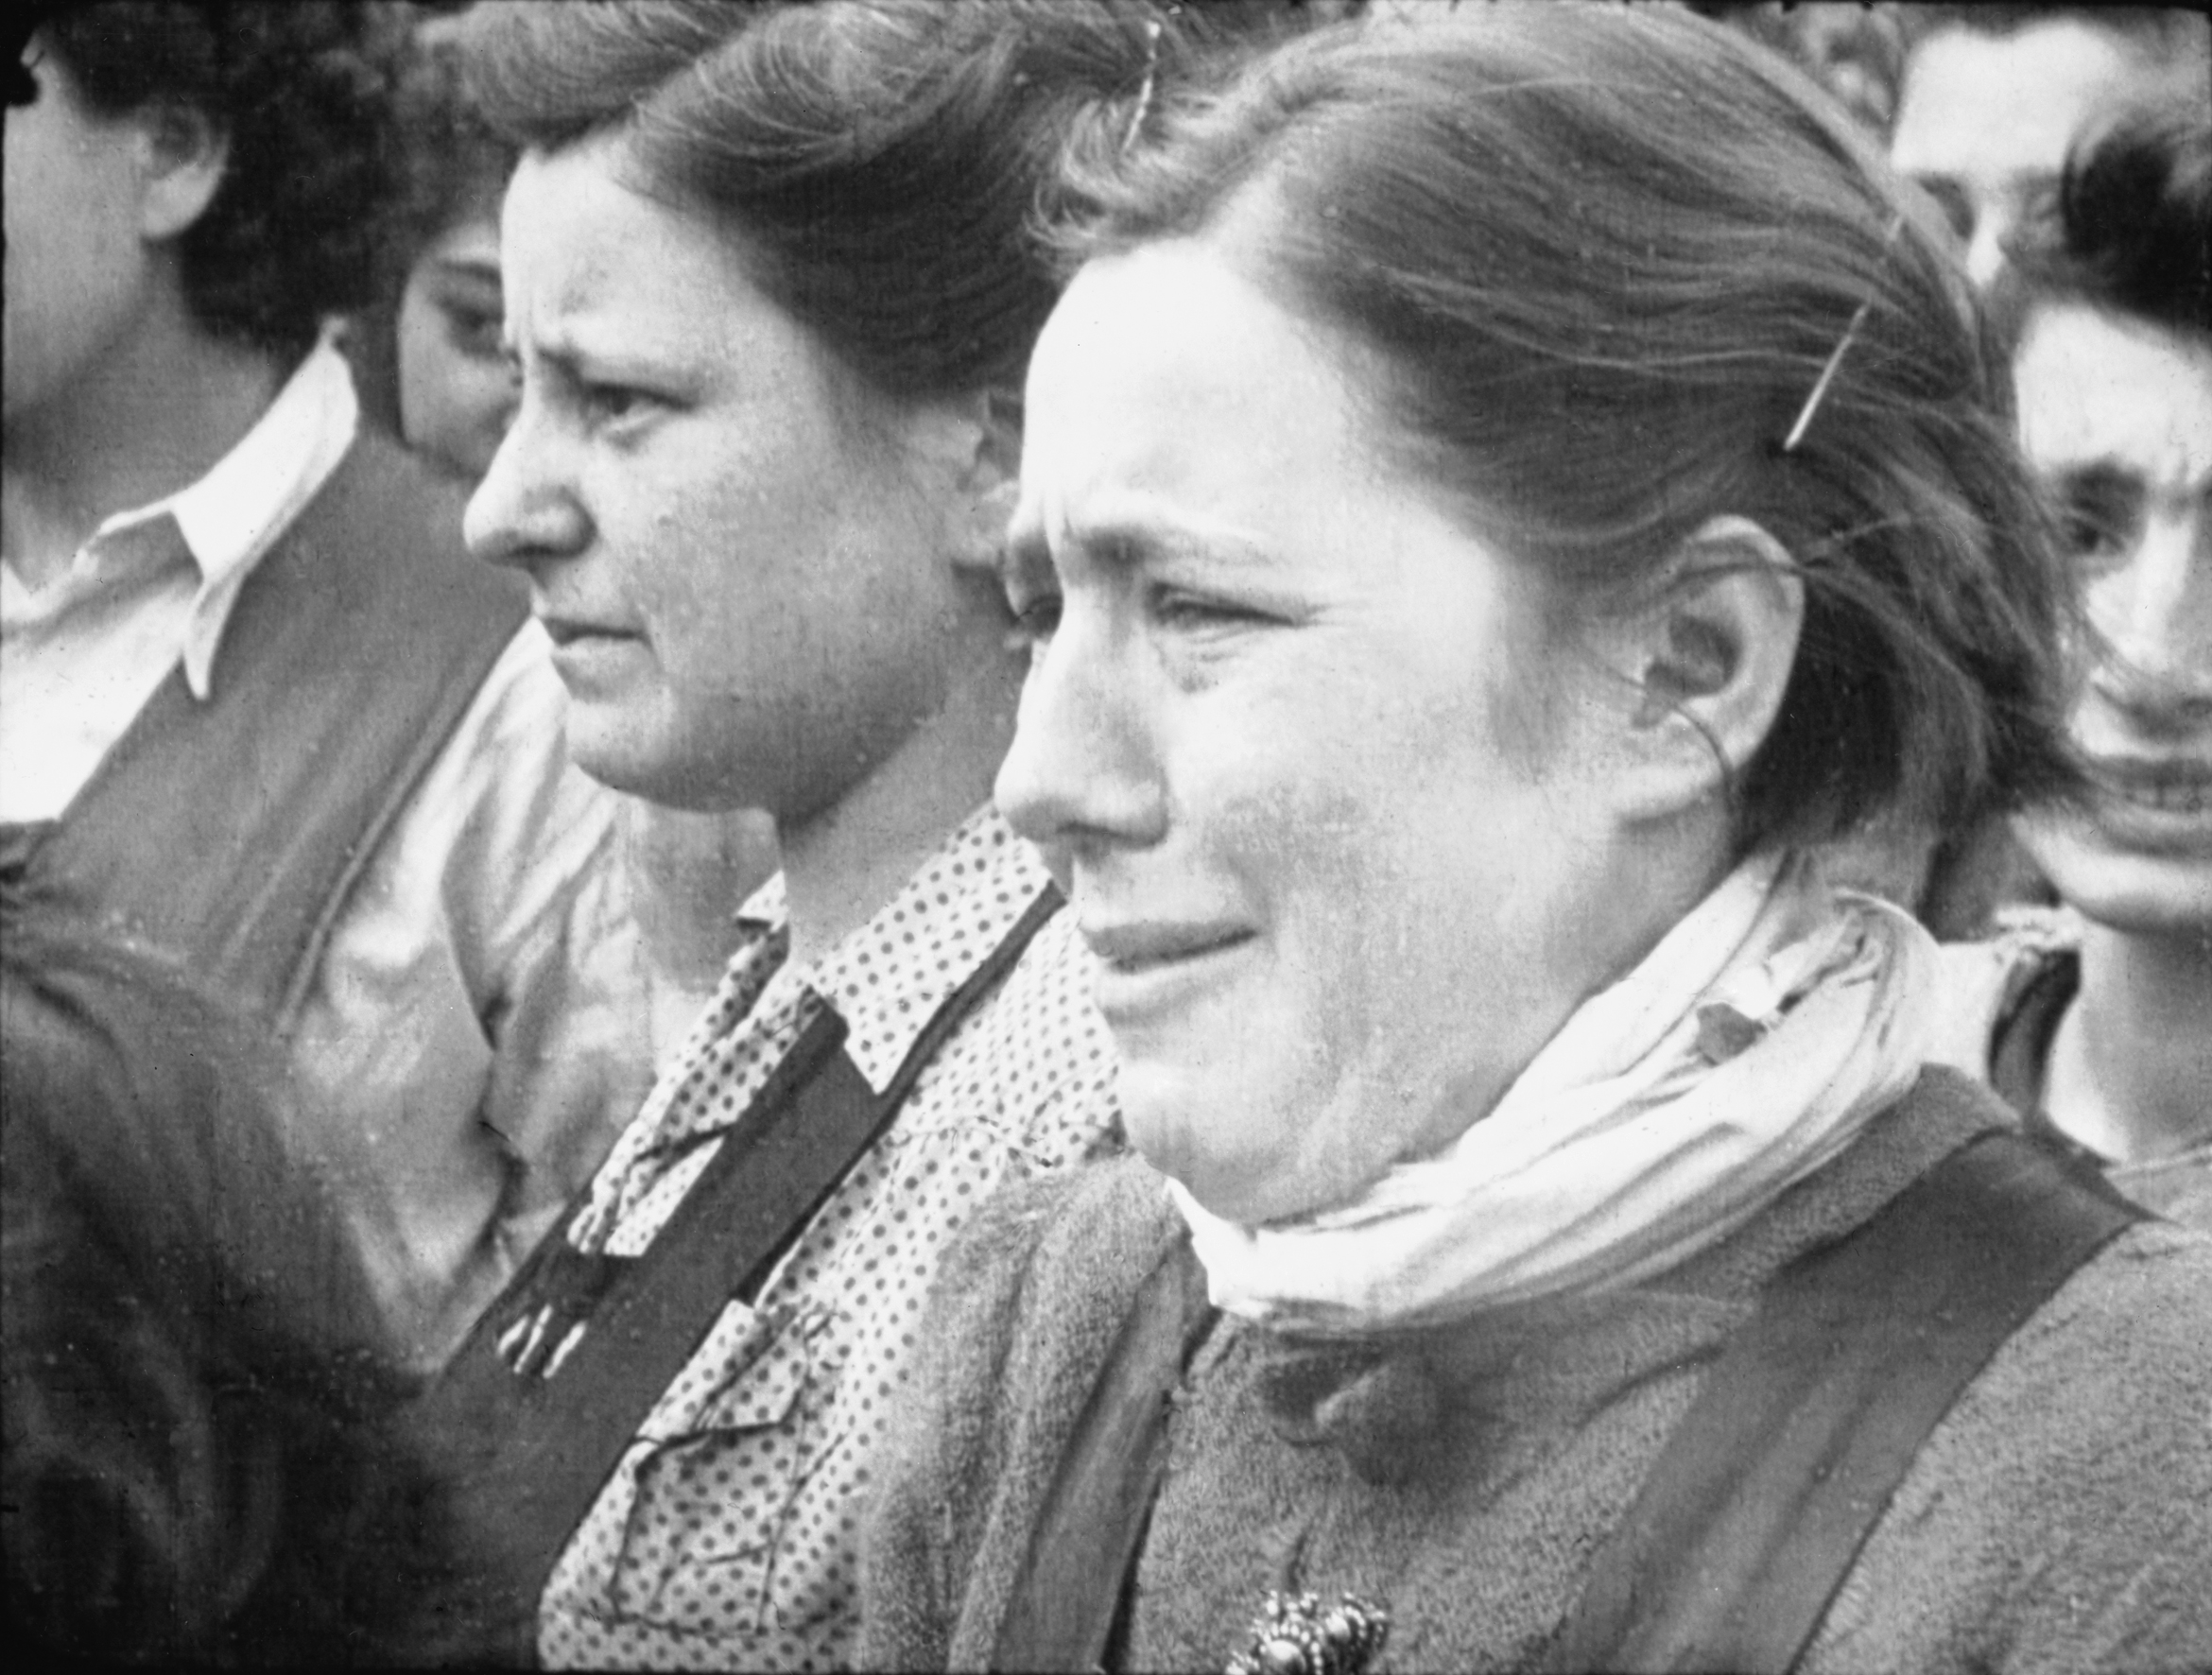 'Reaction of a Girl' taken by Sgt Lewis, 17 April 1945 IWM Film 10012.JPG